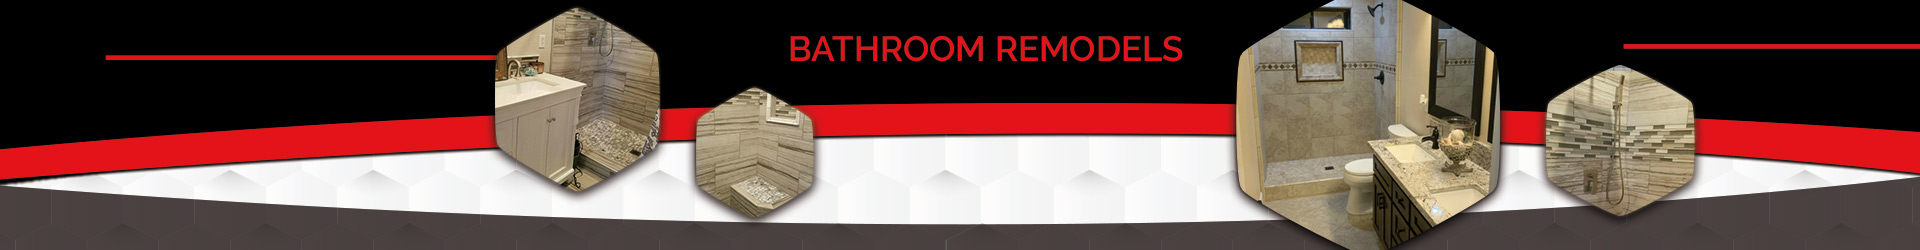 Bathroom Remodels Central Valley 